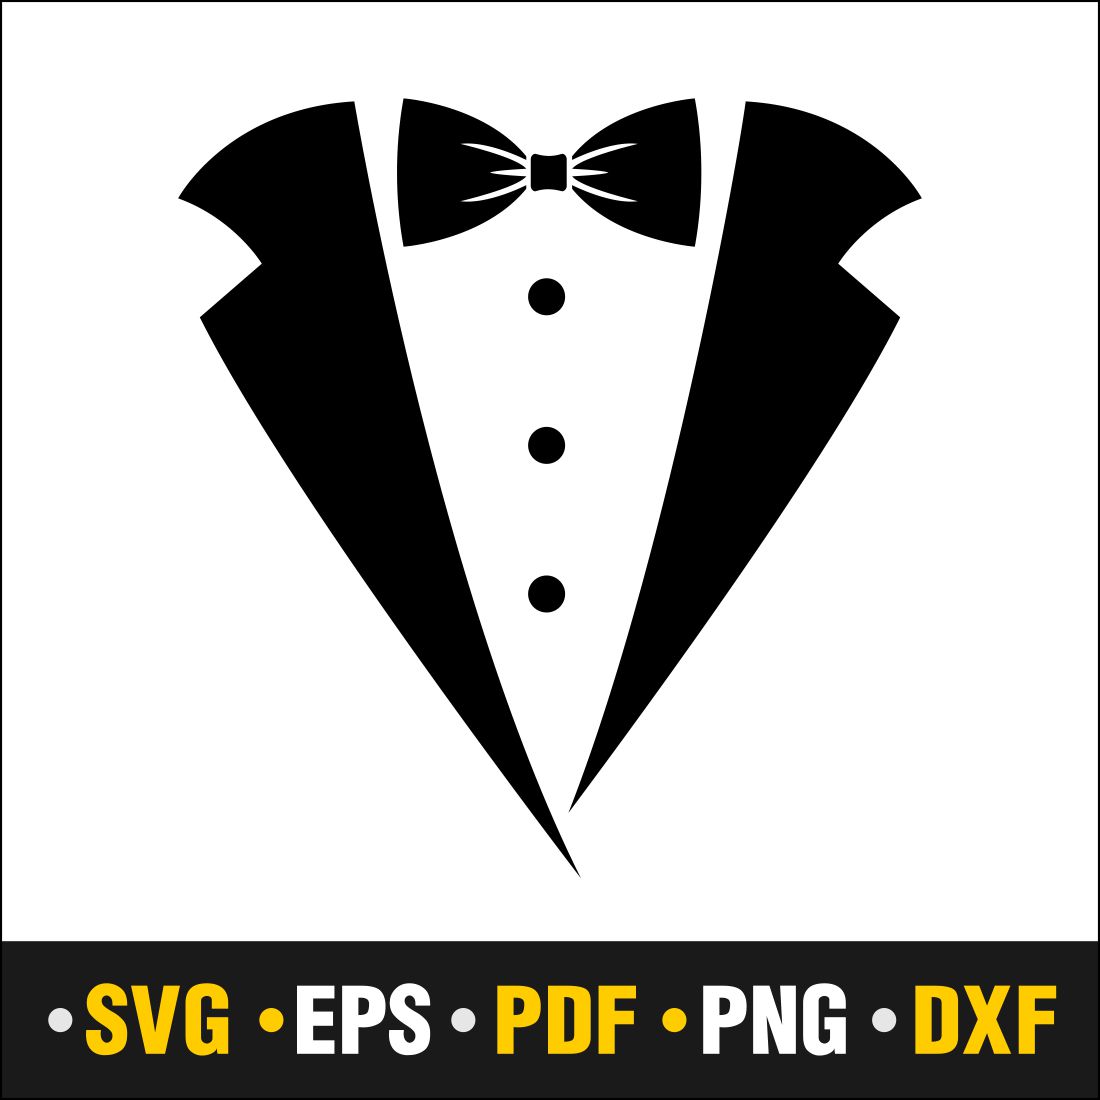 Tuxedo Svg, Bow Svg, Suit Svg Vector Cut file Cricut, Silhouette, Pdf Png, Dxf, Decal, Sticker, Stencil, Vinyl cover image.